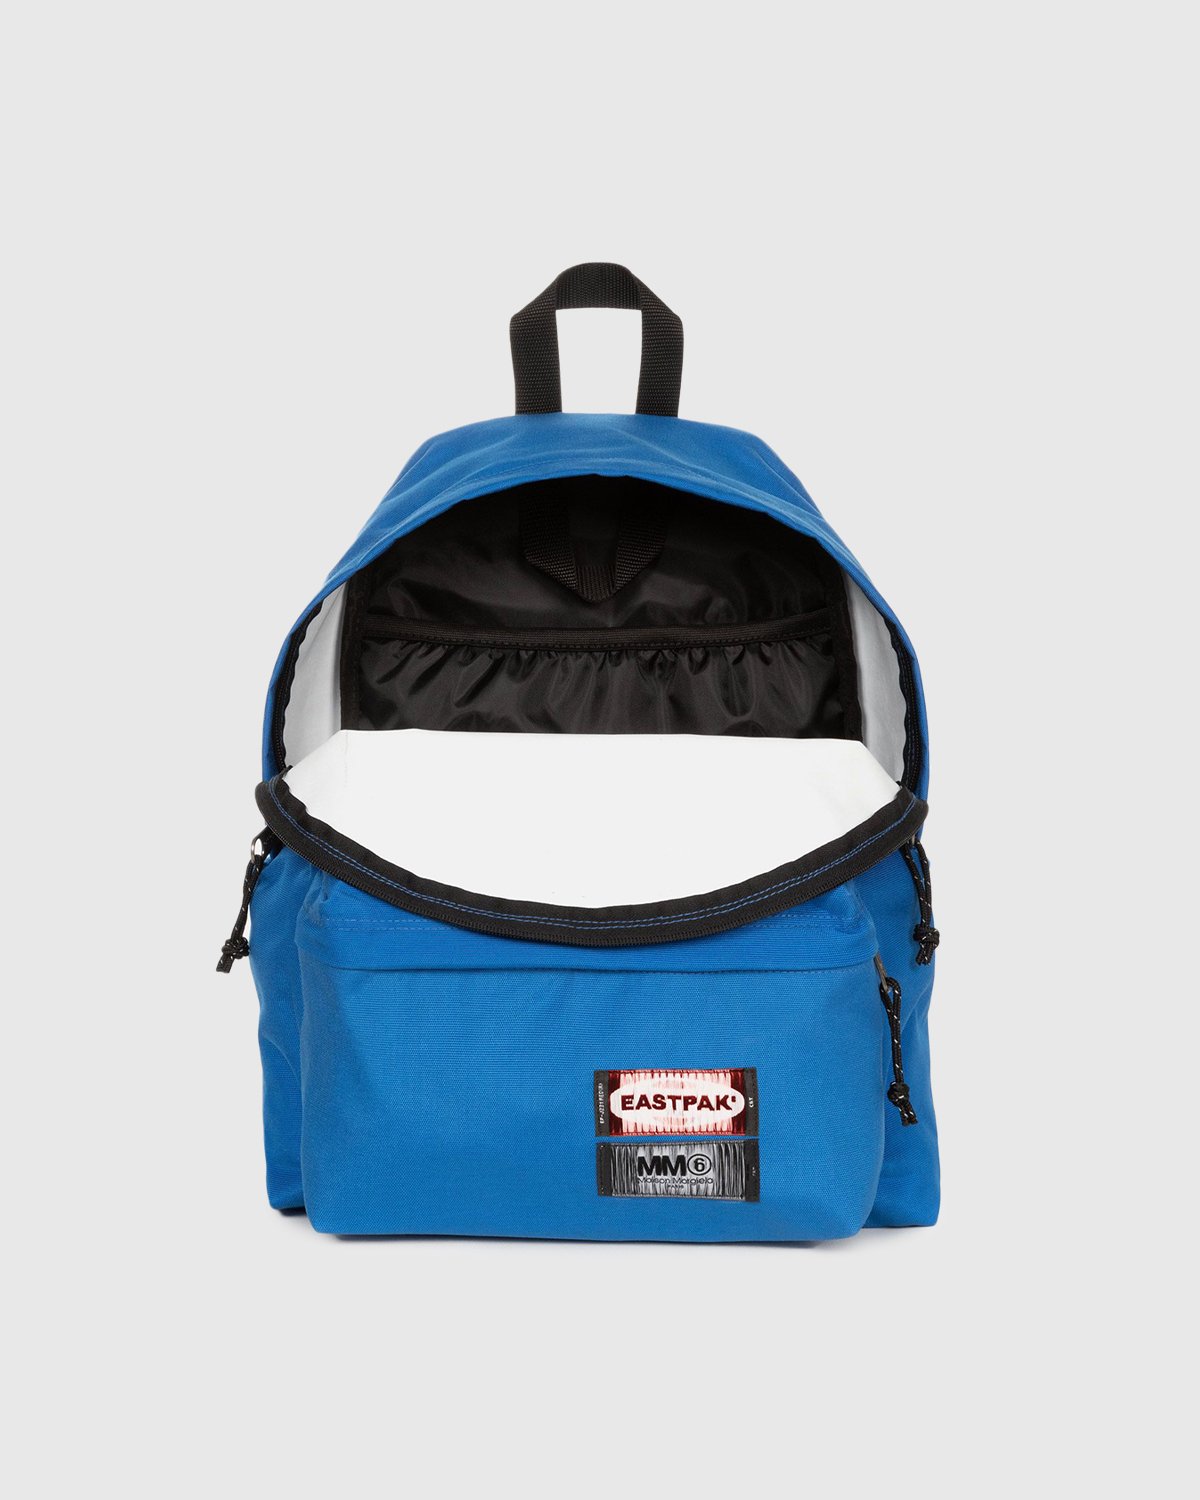 MM6 Maison Margiela x Eastpak - Padded Backpack Dazzling Blue - Accessories - Blue - Image 6